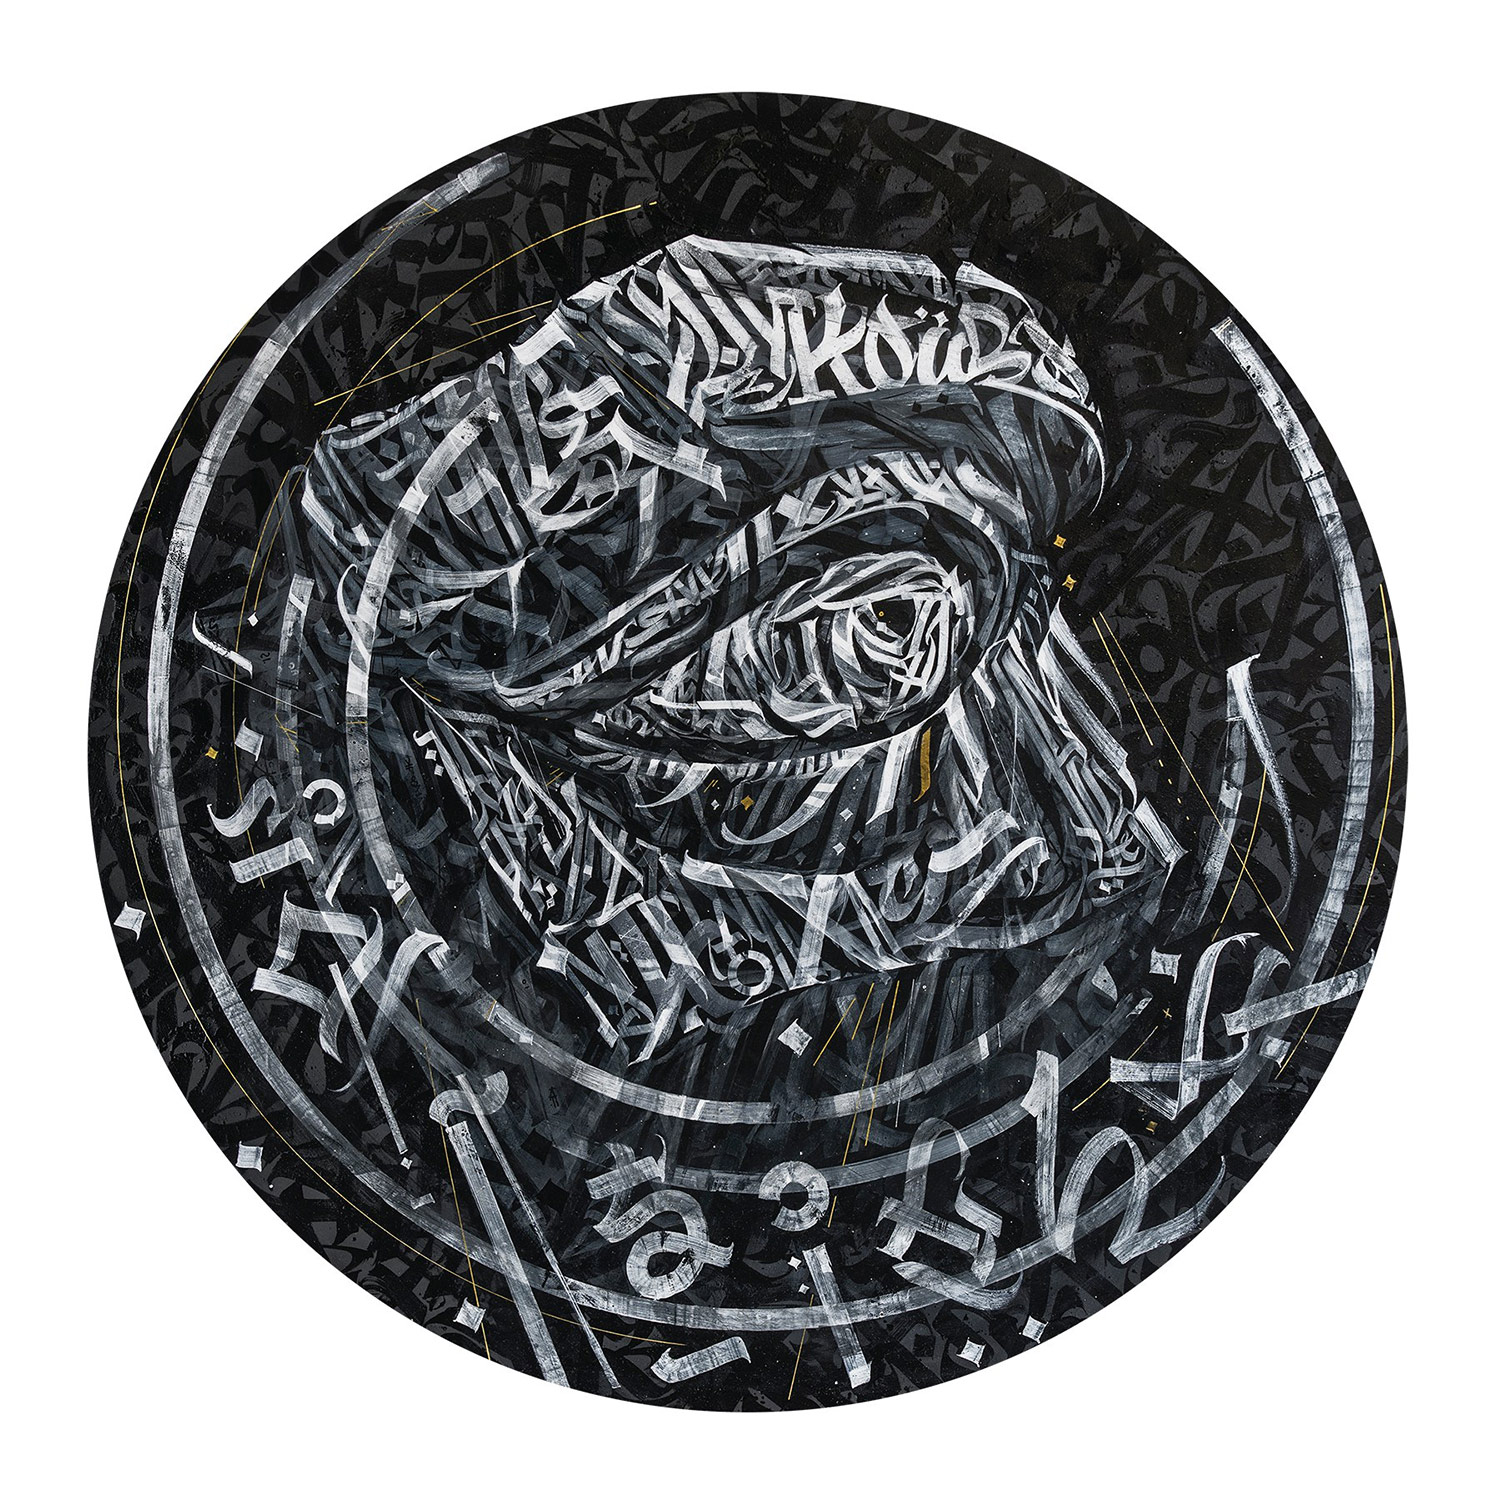 Pokras Lampas - circular calligraphy eye